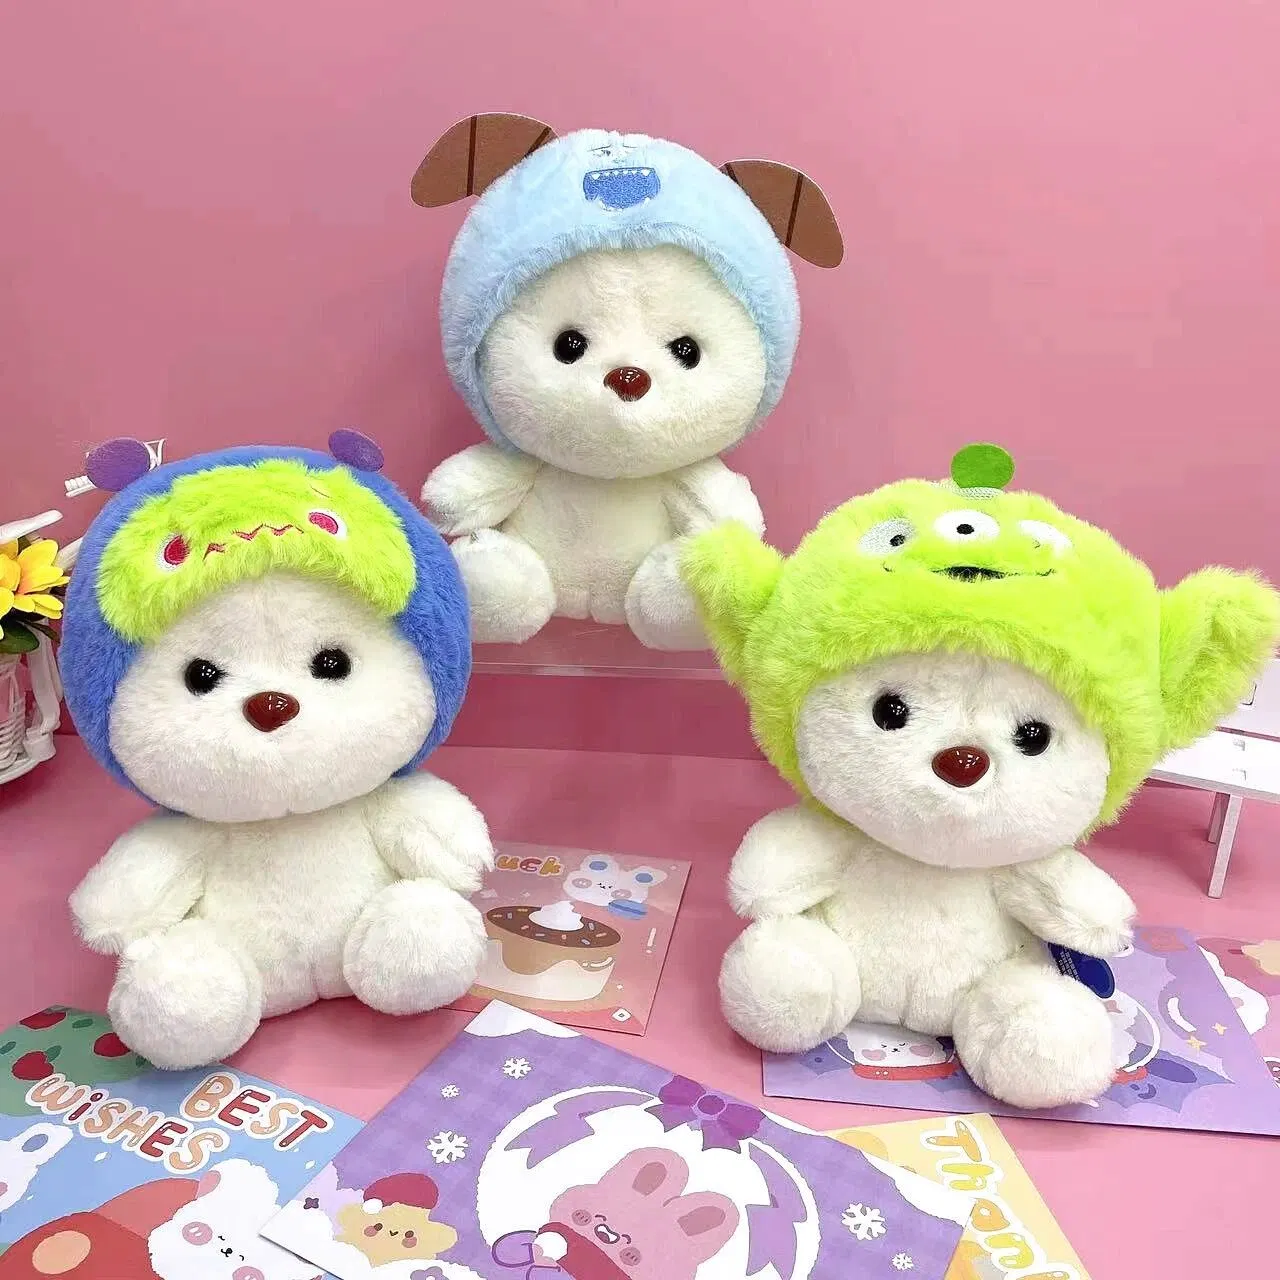 Ruunjoy Bear Plush Toy Cute Stuffed Animal Doll Birthday Lovely Toy for Adults Children Doll